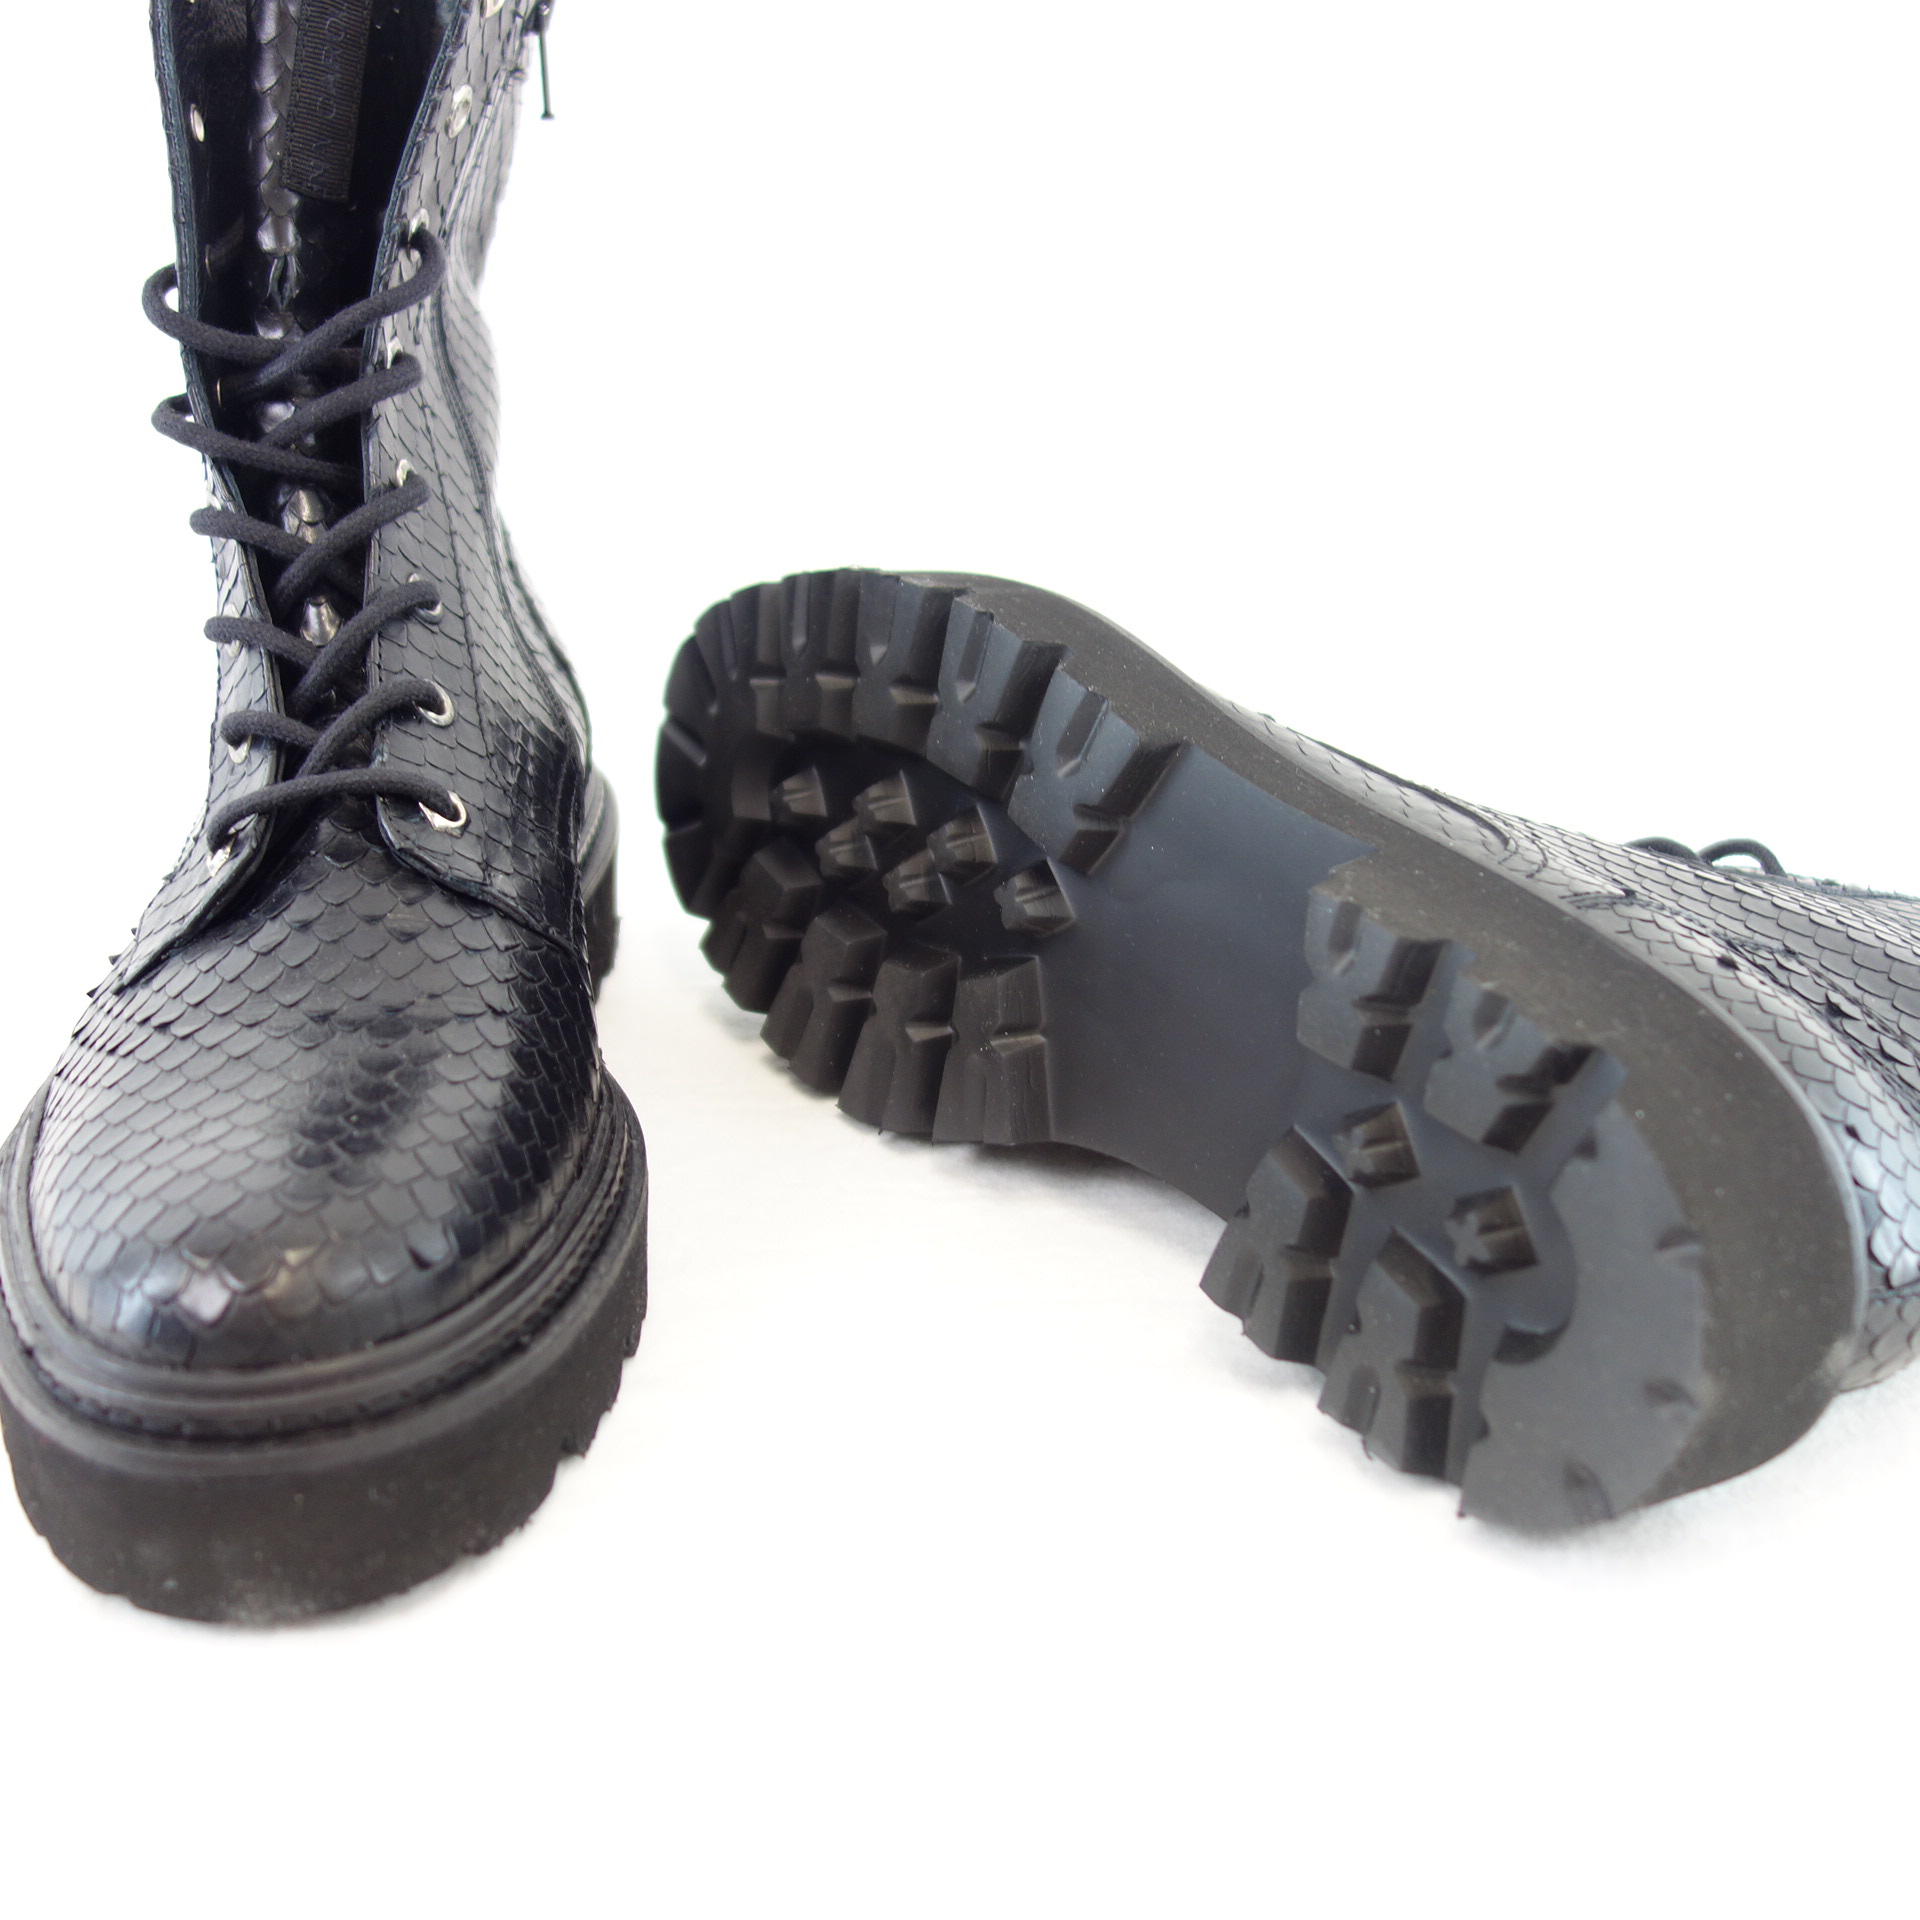 DONNA CAROLINA Damen Schuhe Stiefelette Boots Stiefel Schwarz Leder Modell Denver